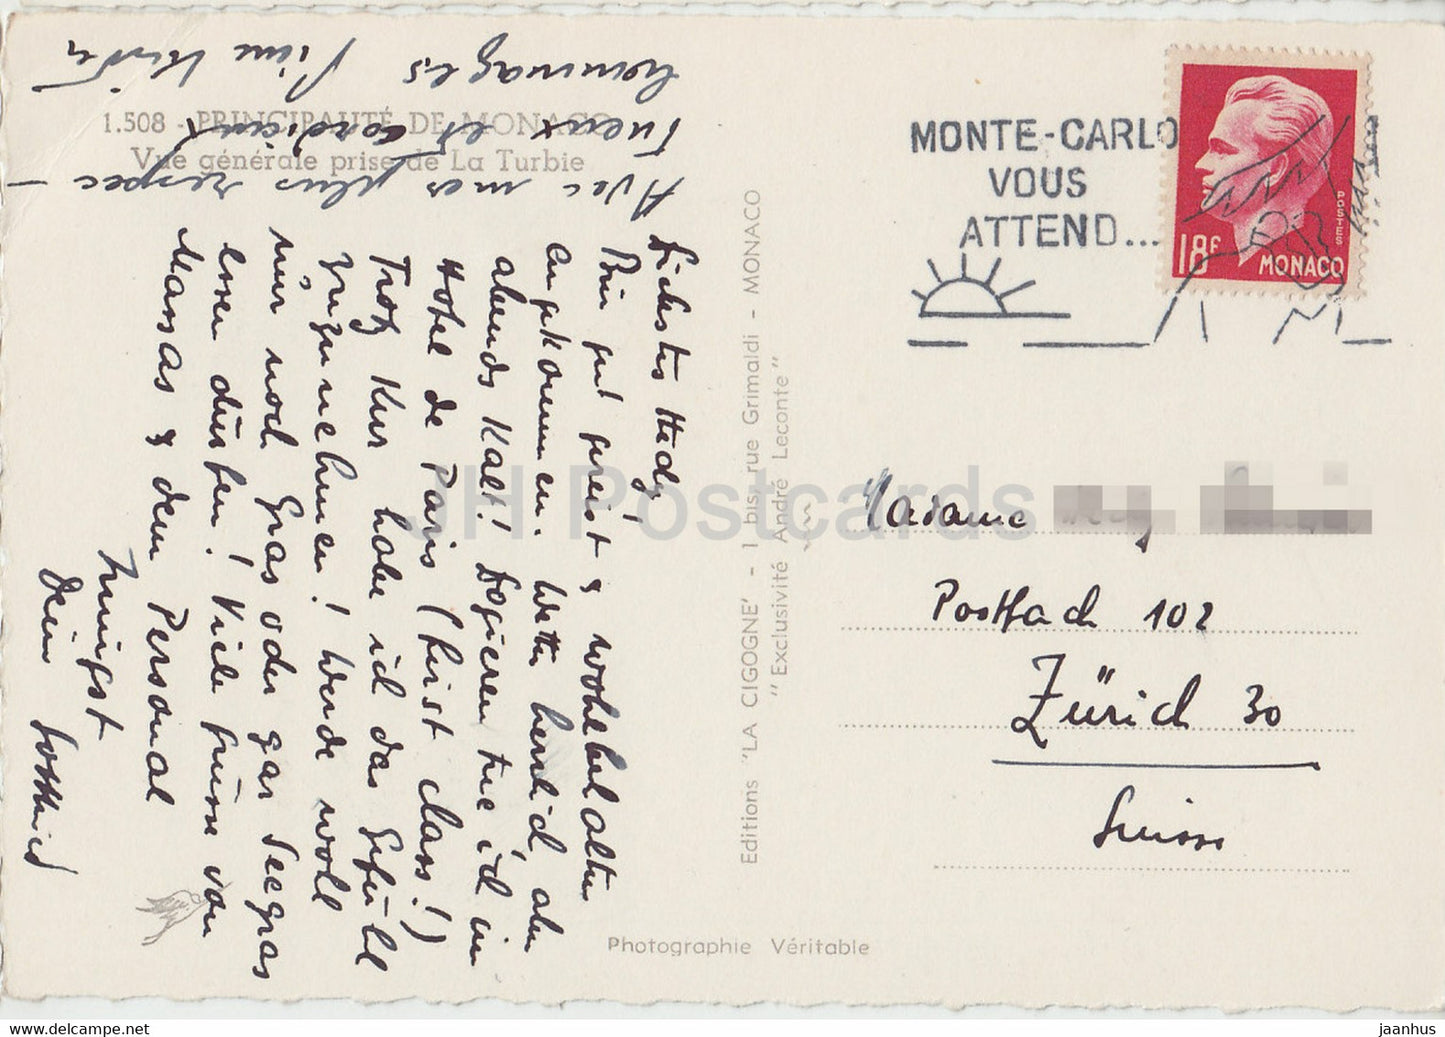 Vue Generale Prise de La Turbie – alte Postkarte – Monaco – gebraucht